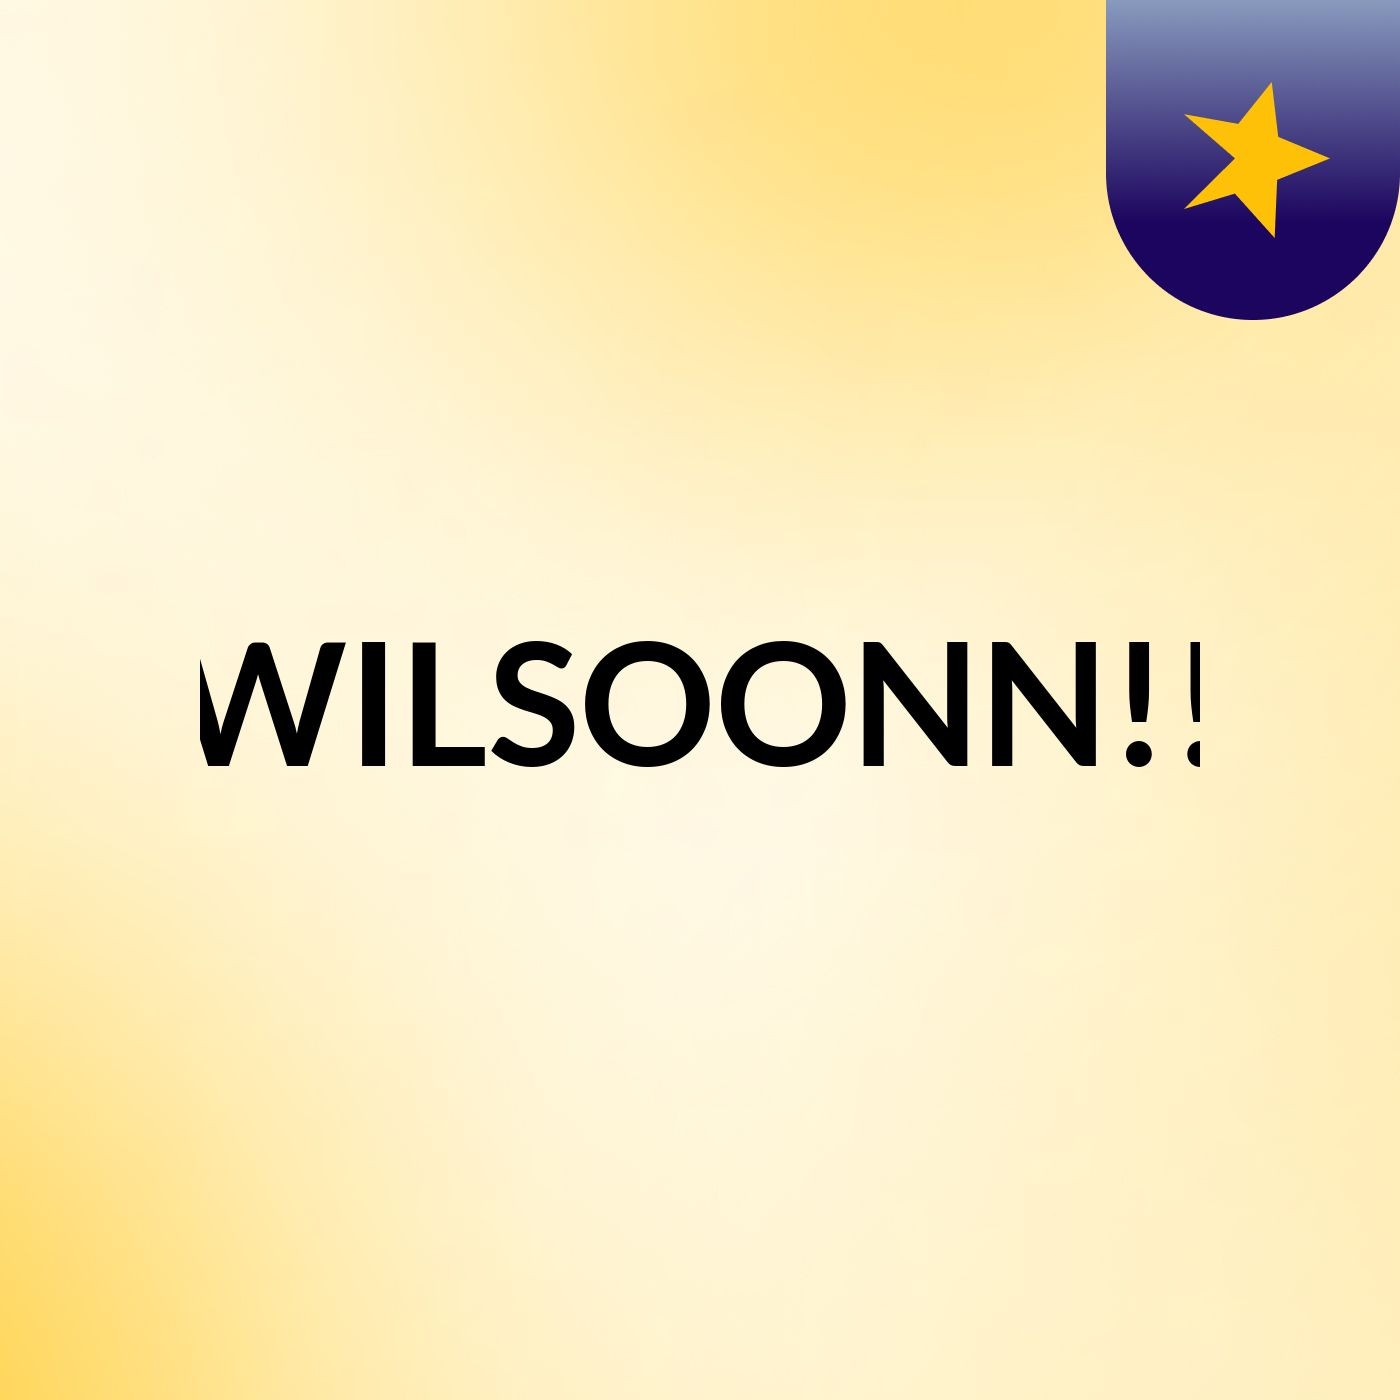 WILSOONN!!